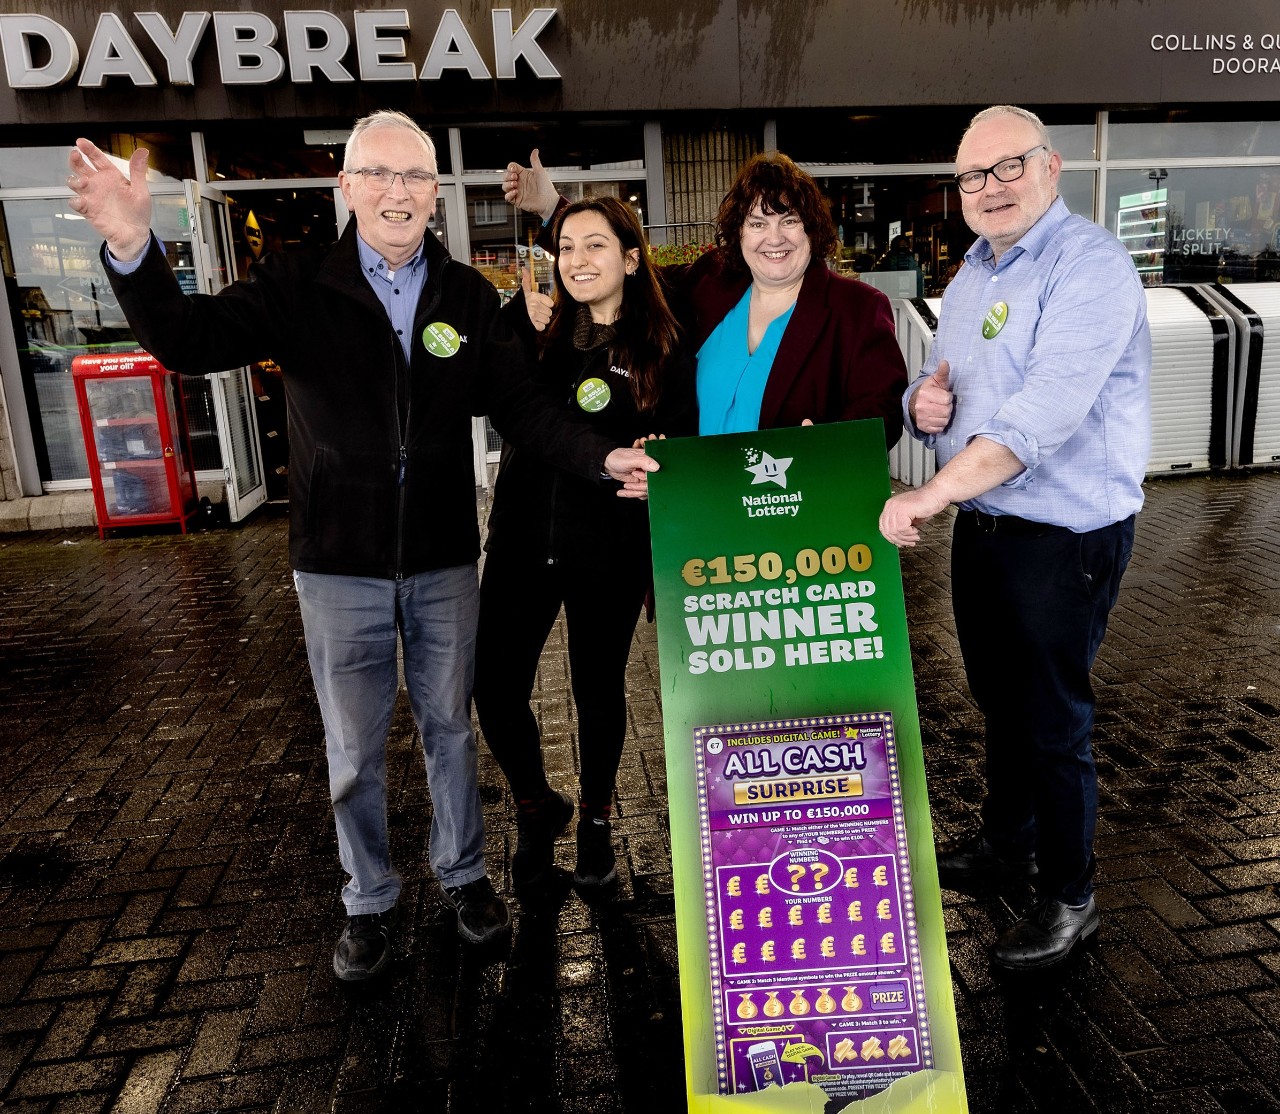 Daybreak store in Dooradoyle in Co. Limerick celebrates sale of winning scratchcard